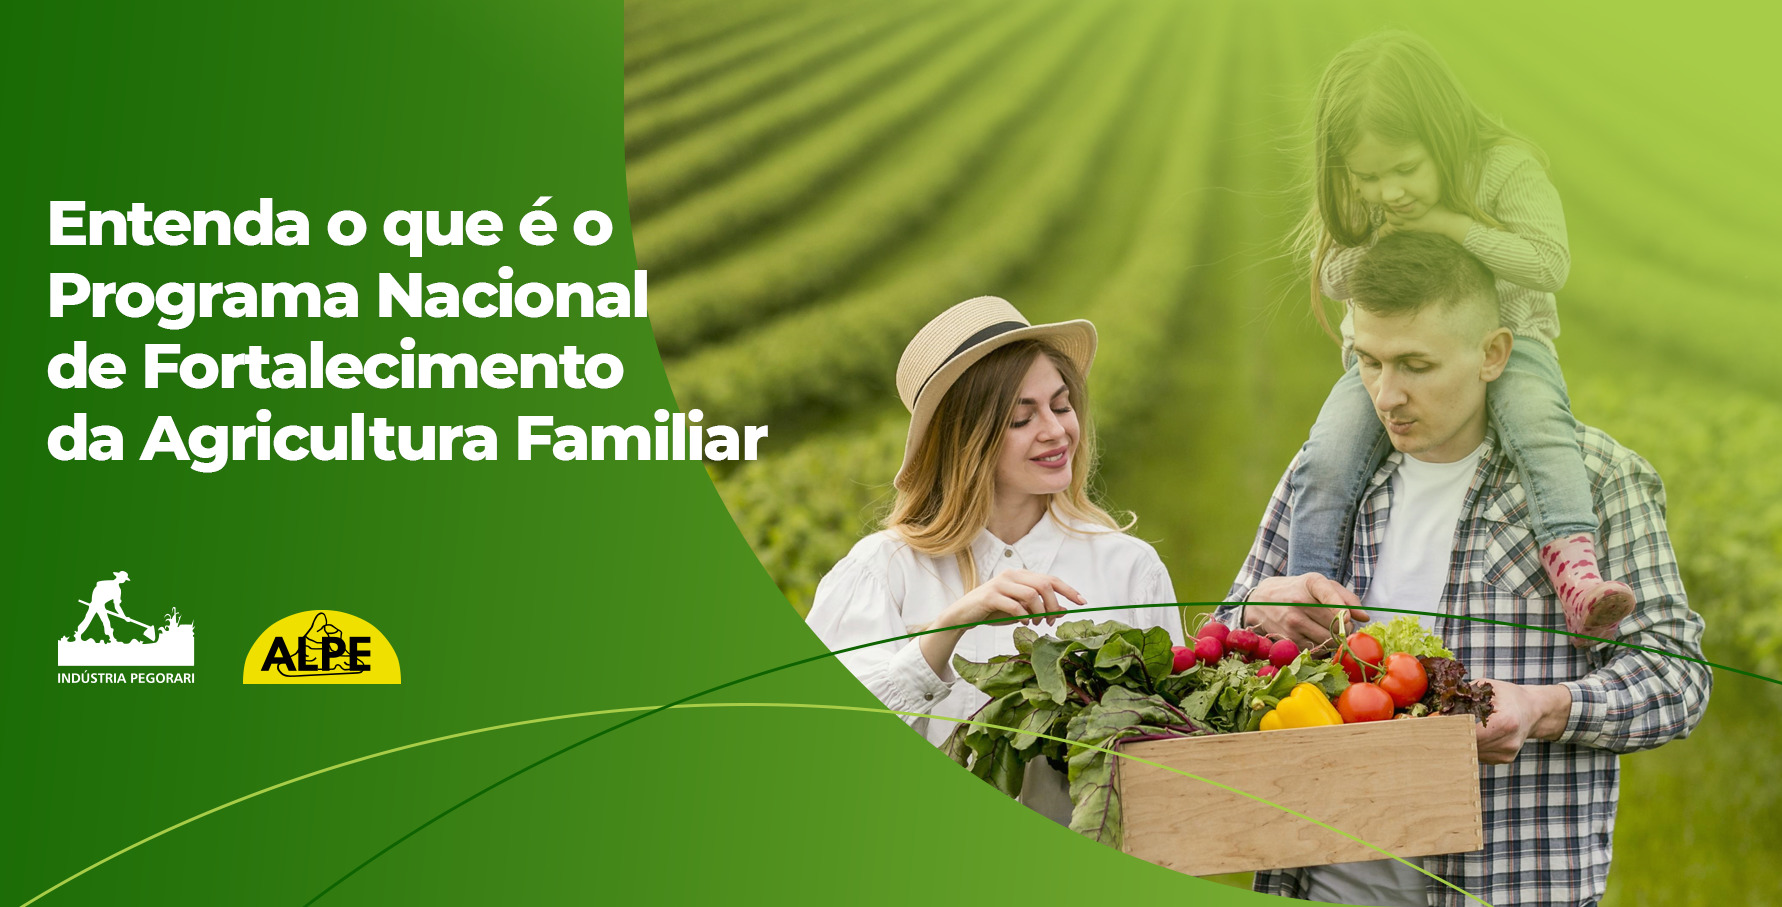 Programa Nacional De Fortalecimento Da Agricultura Familiar O Que é Pegorari Agrícola 5893